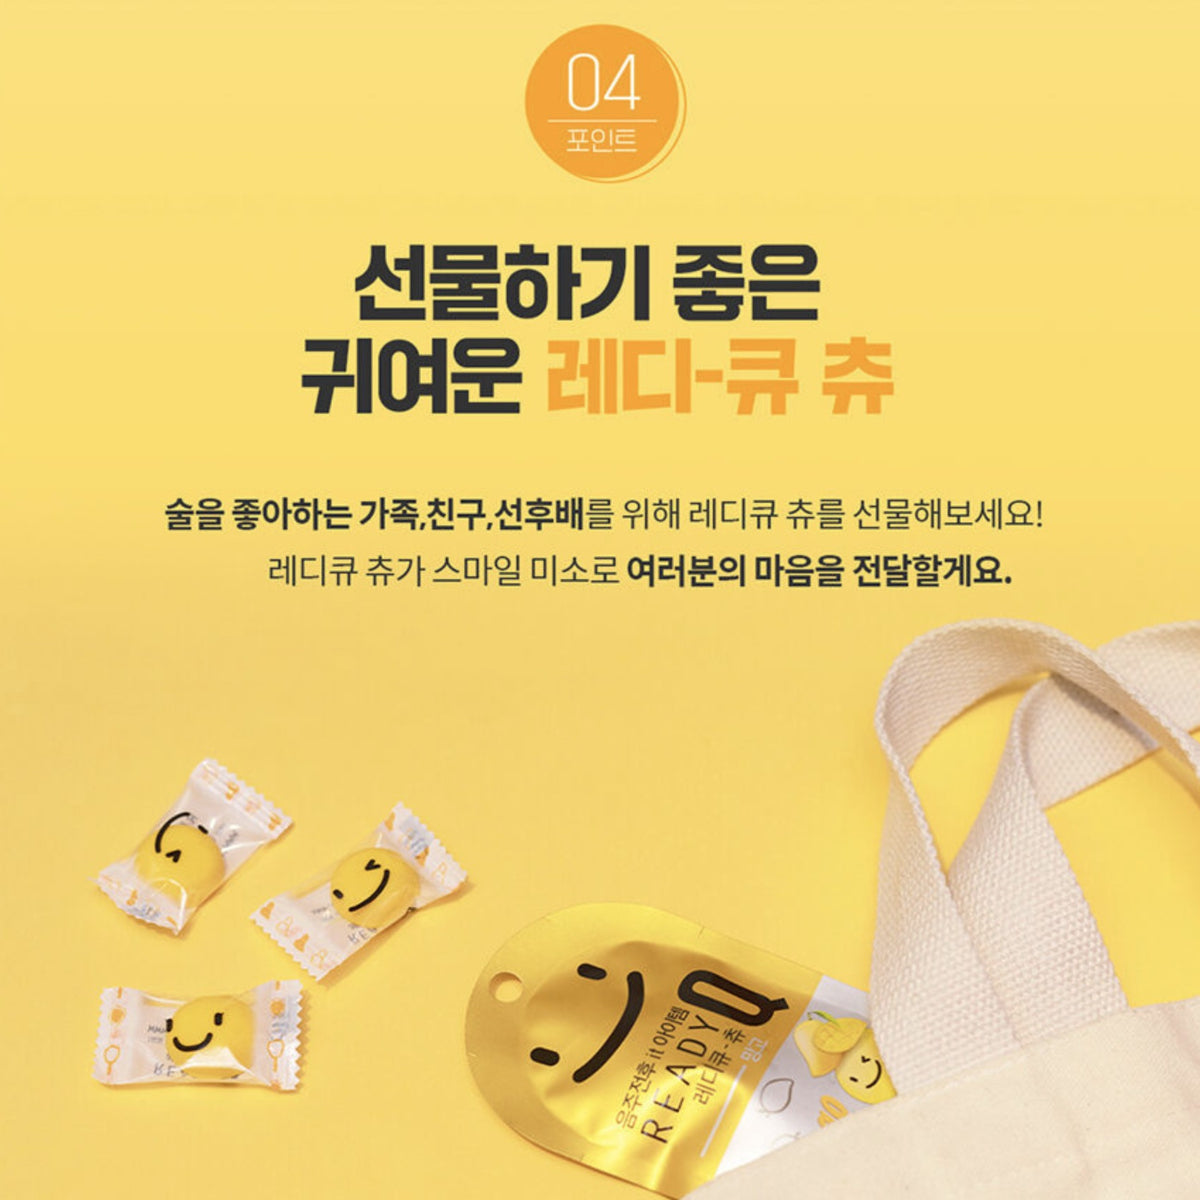 HANDOK Ready Q Chew Mango Hangover Relief Care Jelly 3pcs/pack, 10packs/box / from Seoul, Korea